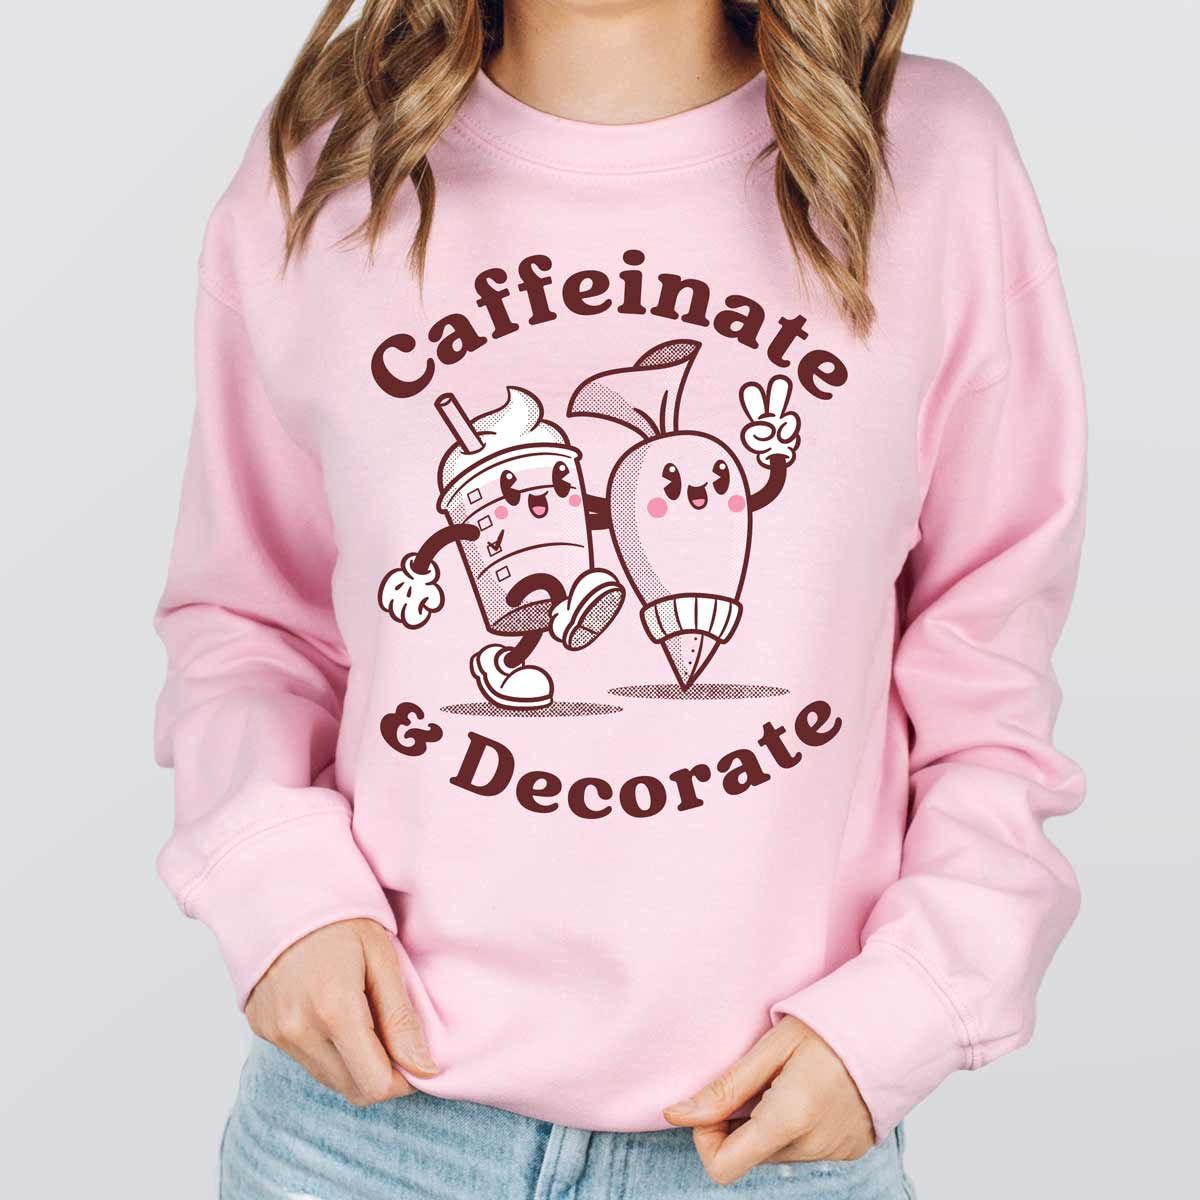 Caffeinate & Decorate Unisex Sweatshirt